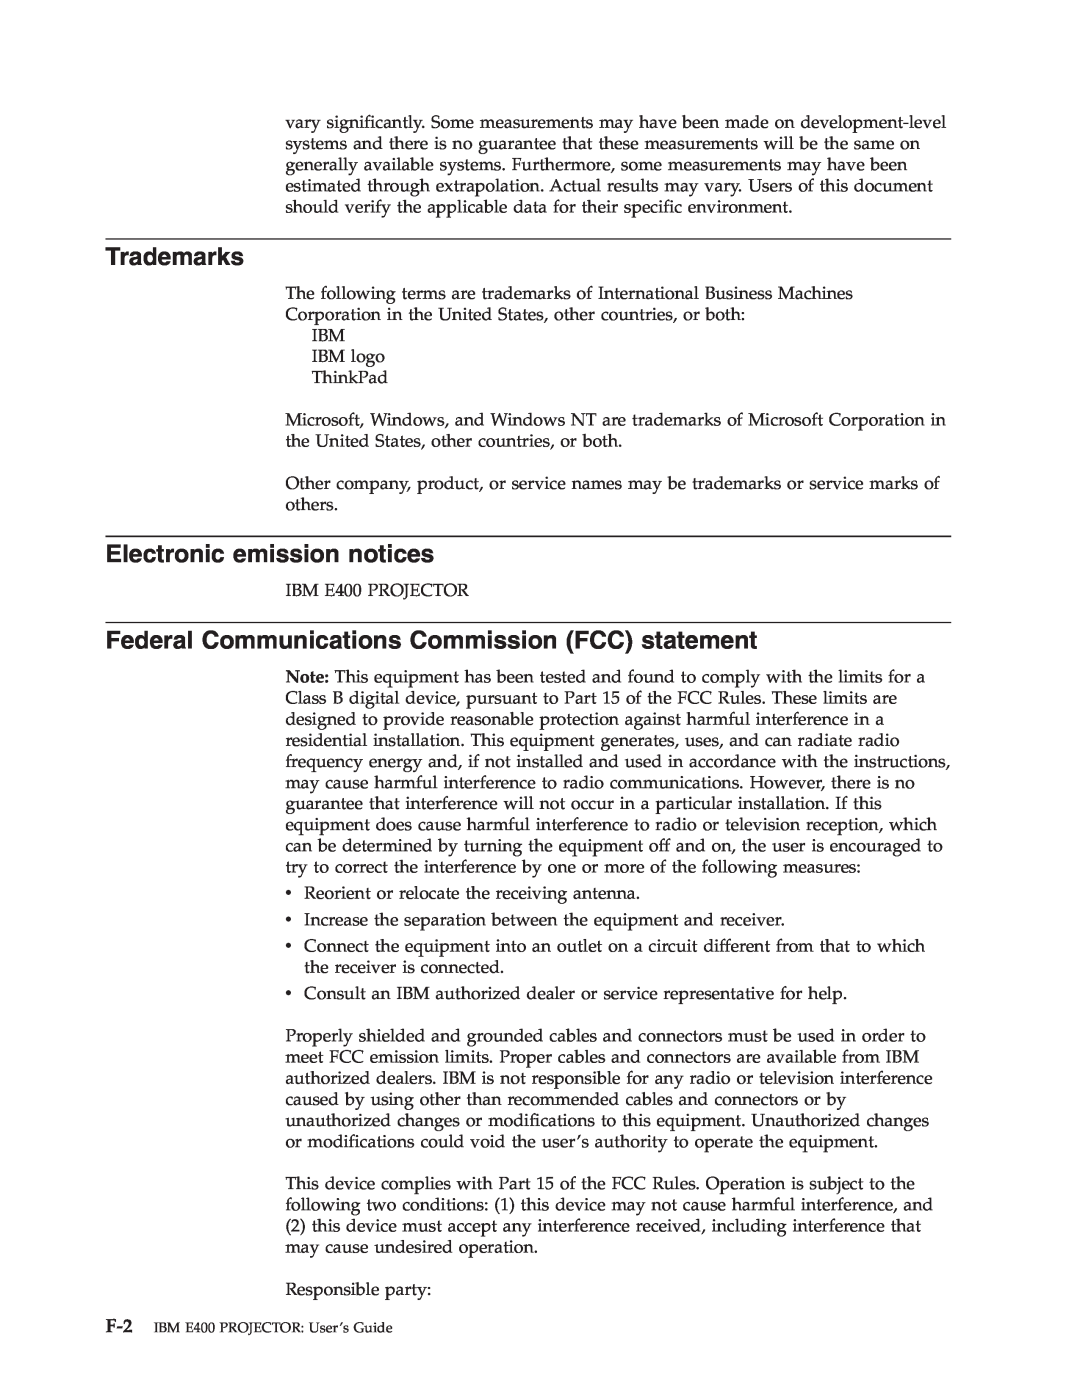 IBM Partner Pavilion PROJECTOR E400 manual Trademarks, Electronic emission notices 